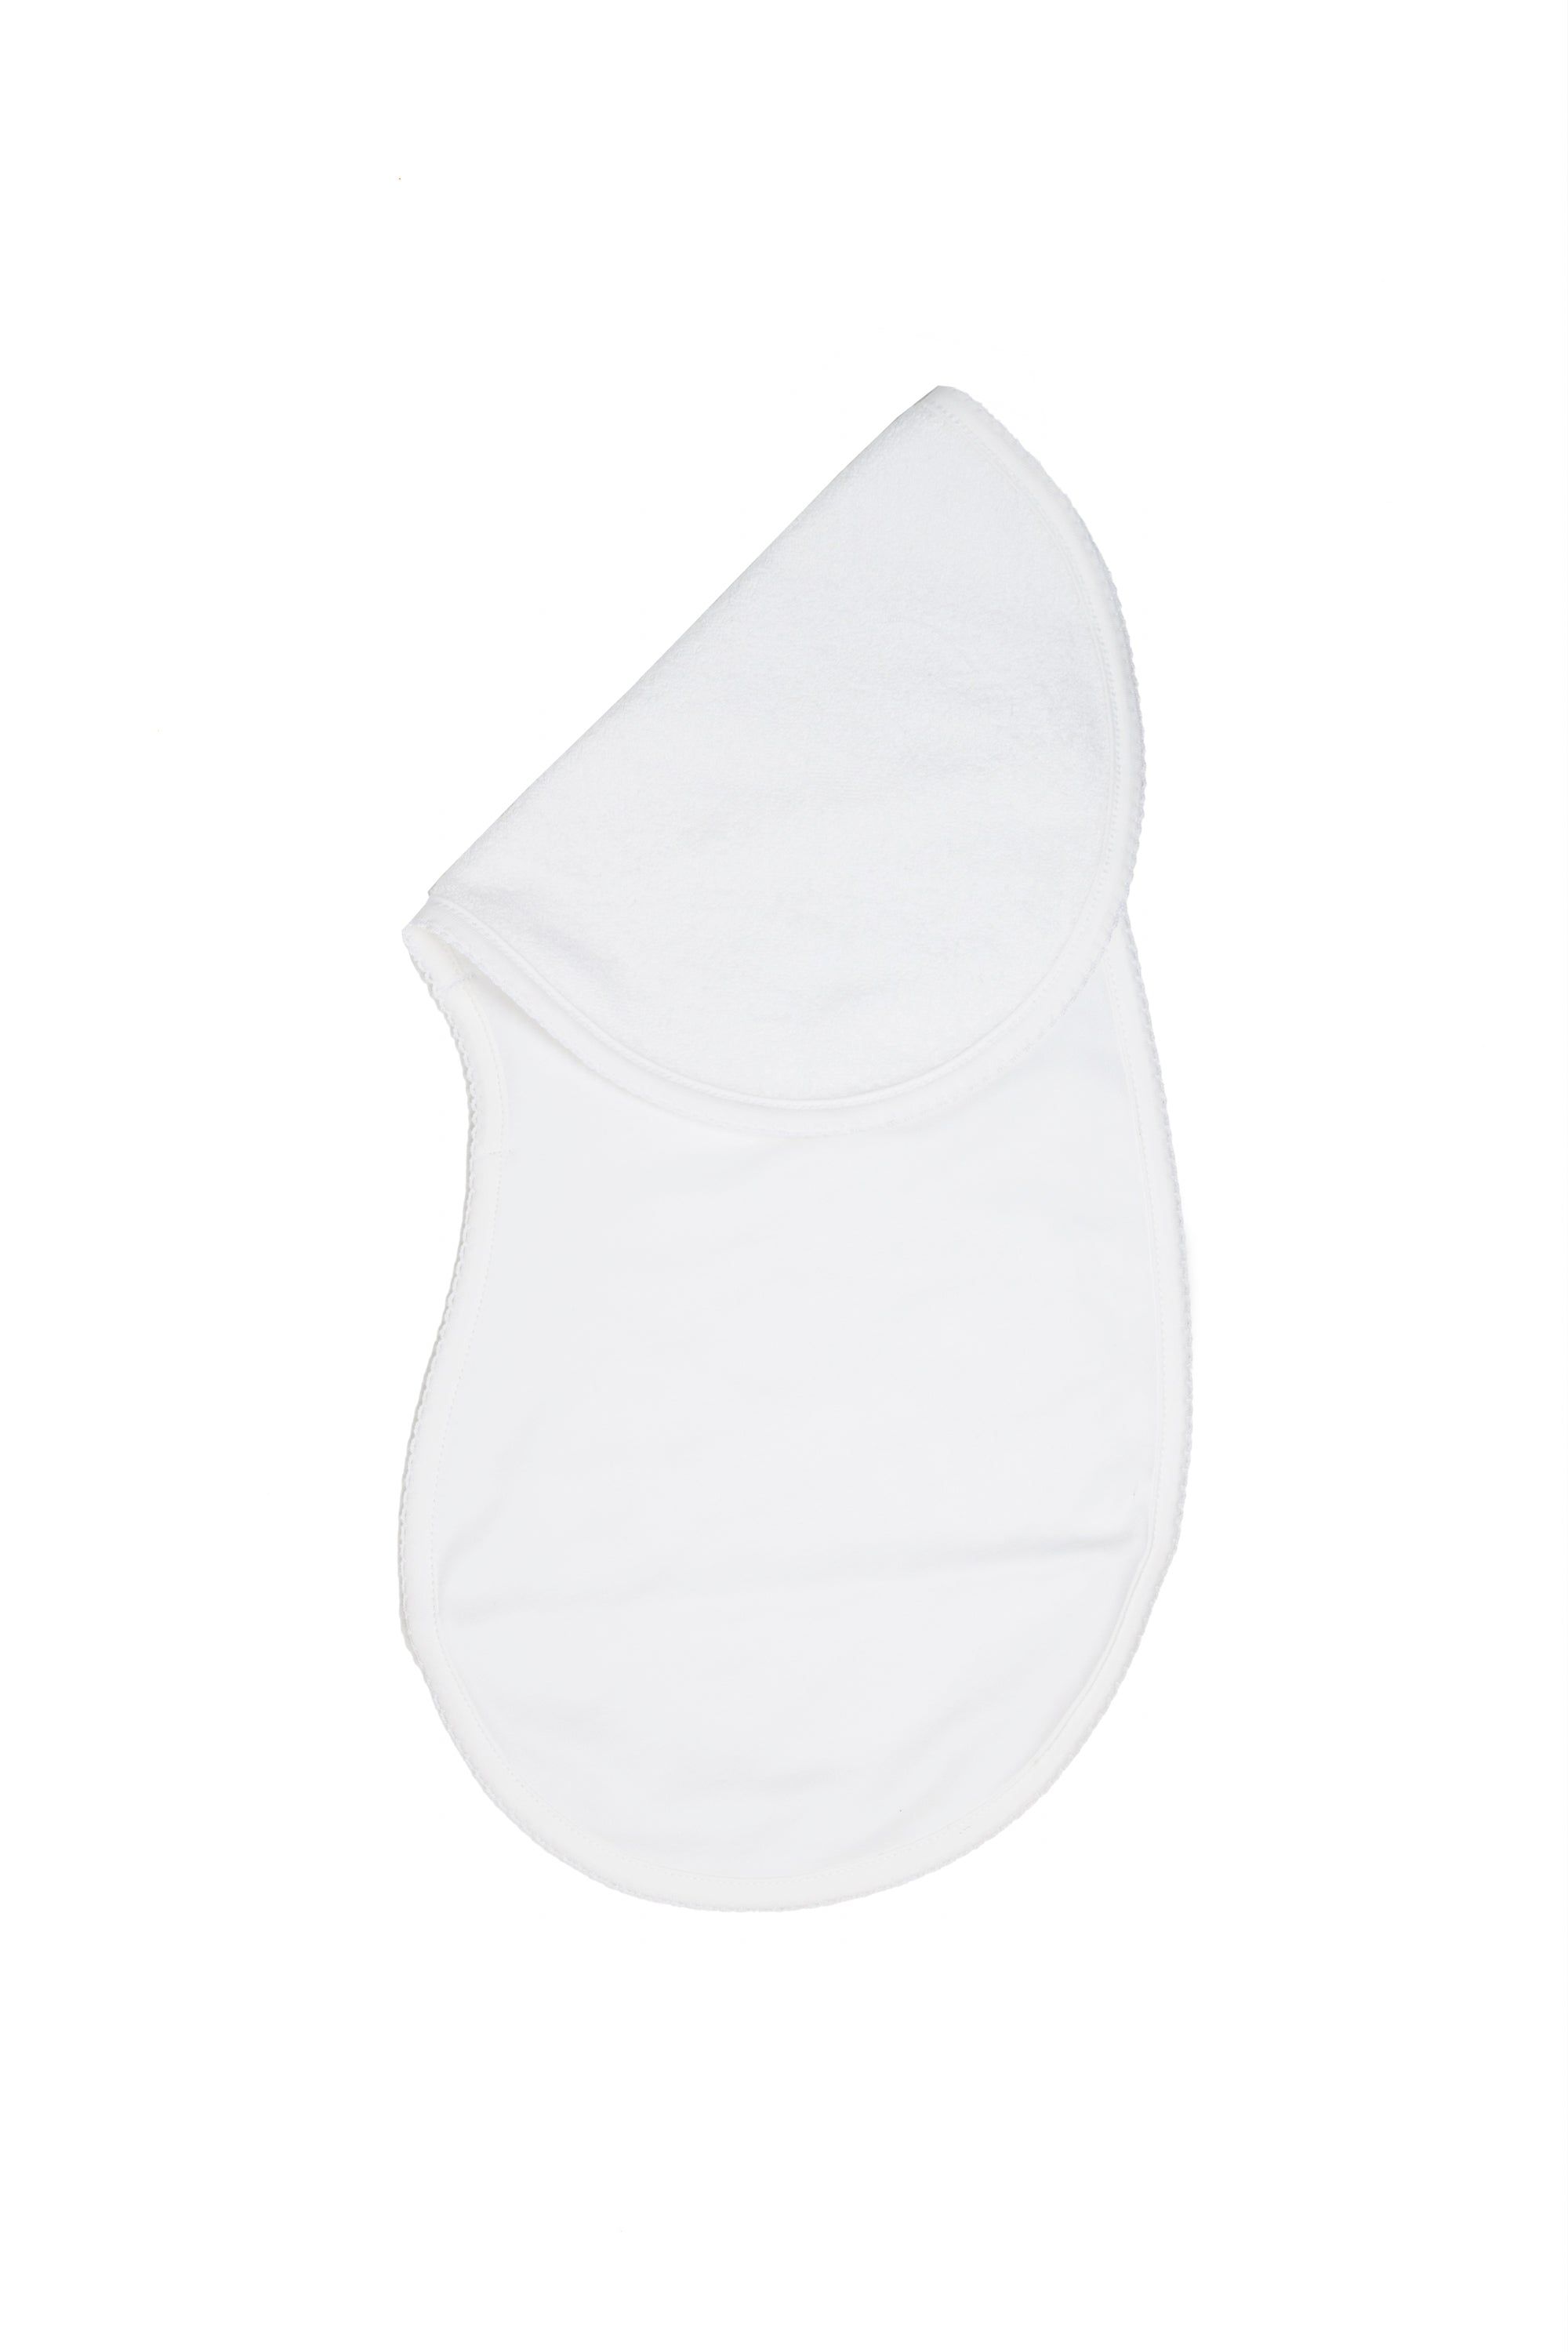 Unisex White Baby Burp Cloth